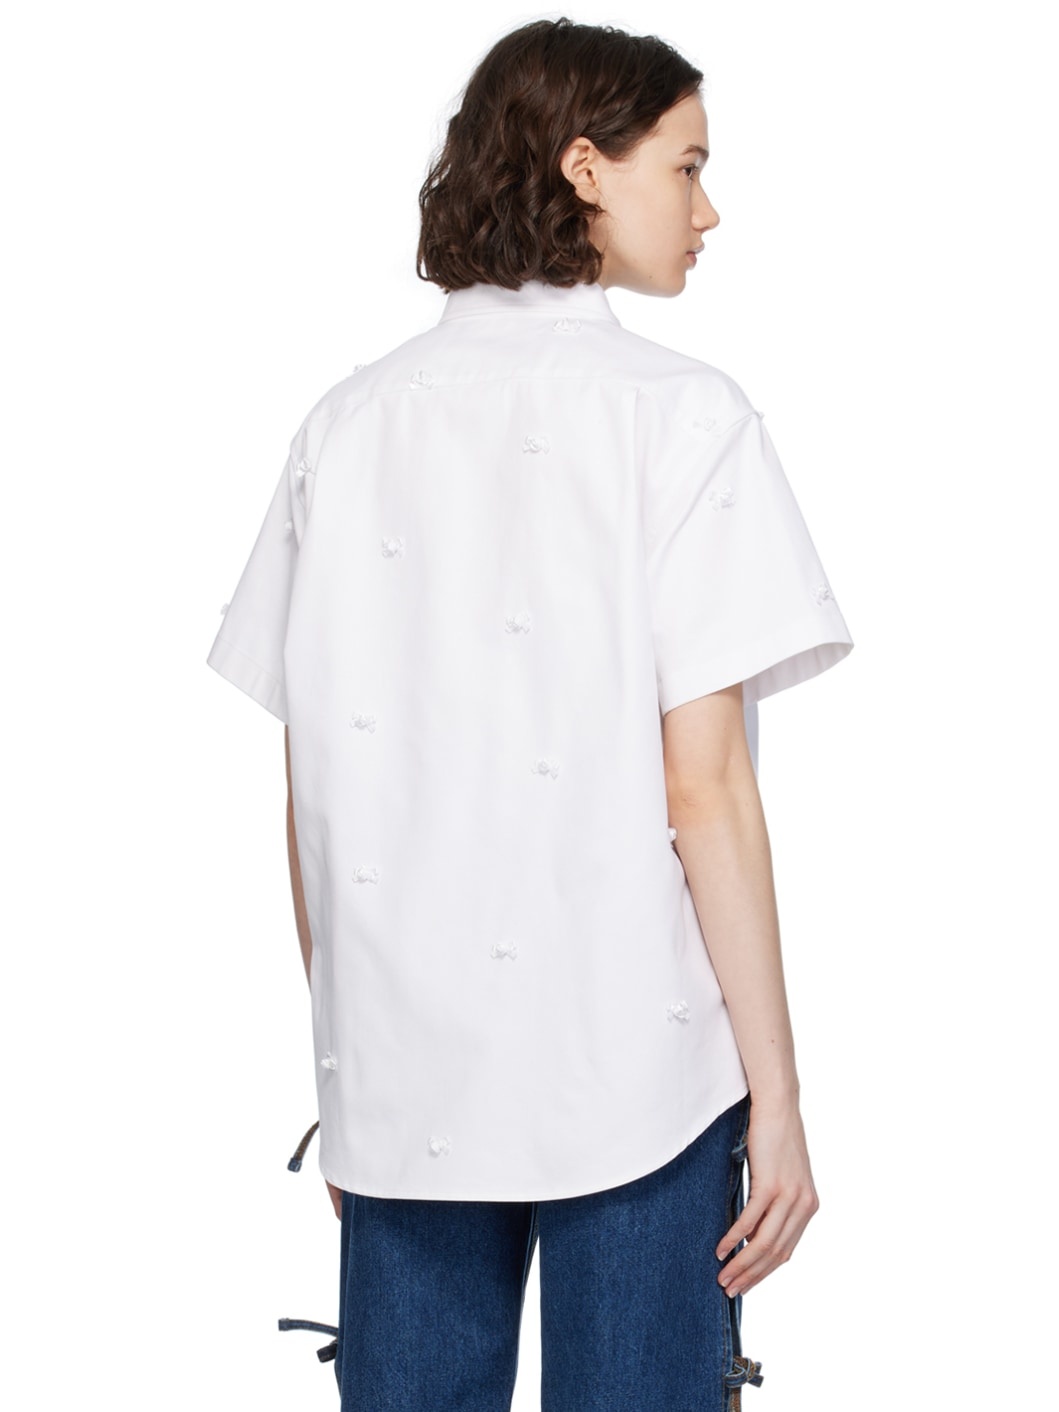 White Ribbon Shirt - 3